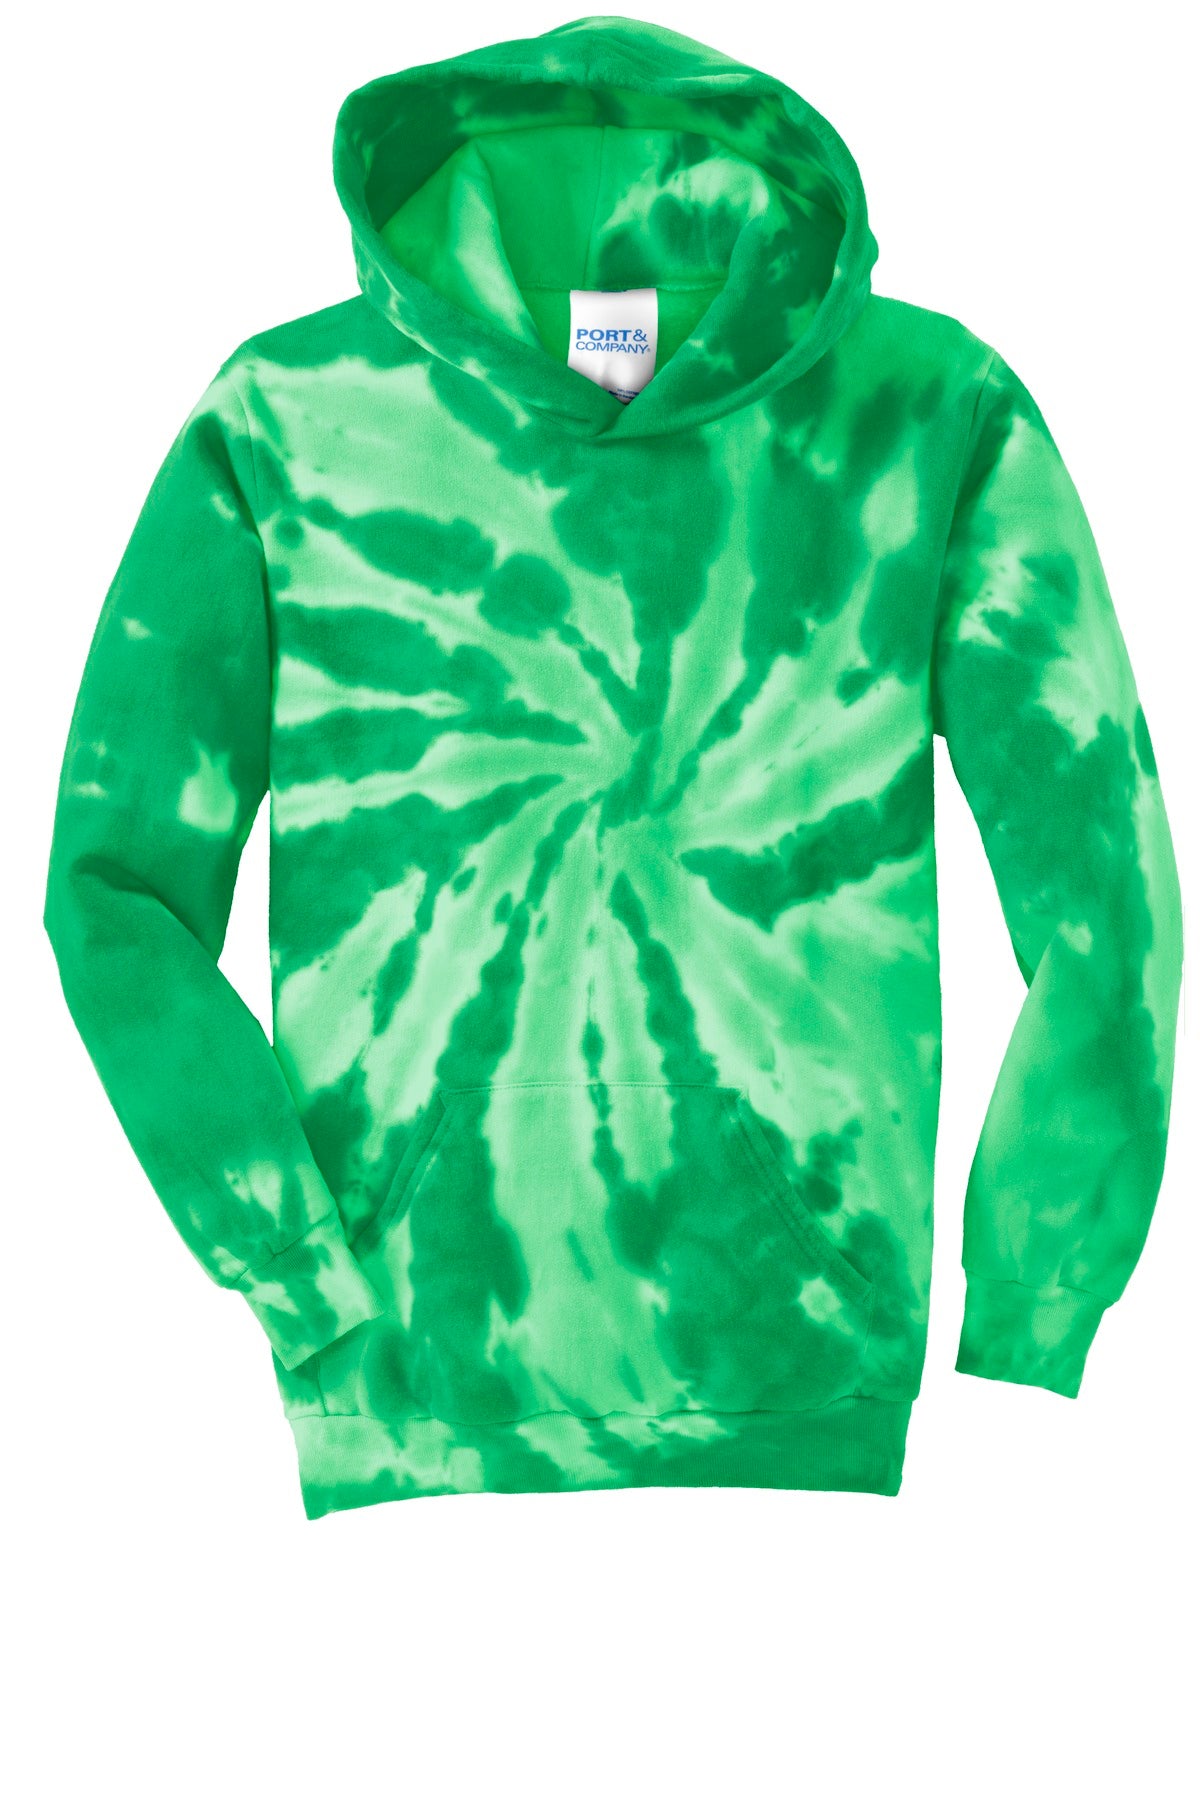 Port & Company Youth Tie-Dye Pullover Hooded Sweatshirt. PC146Y - Kelly